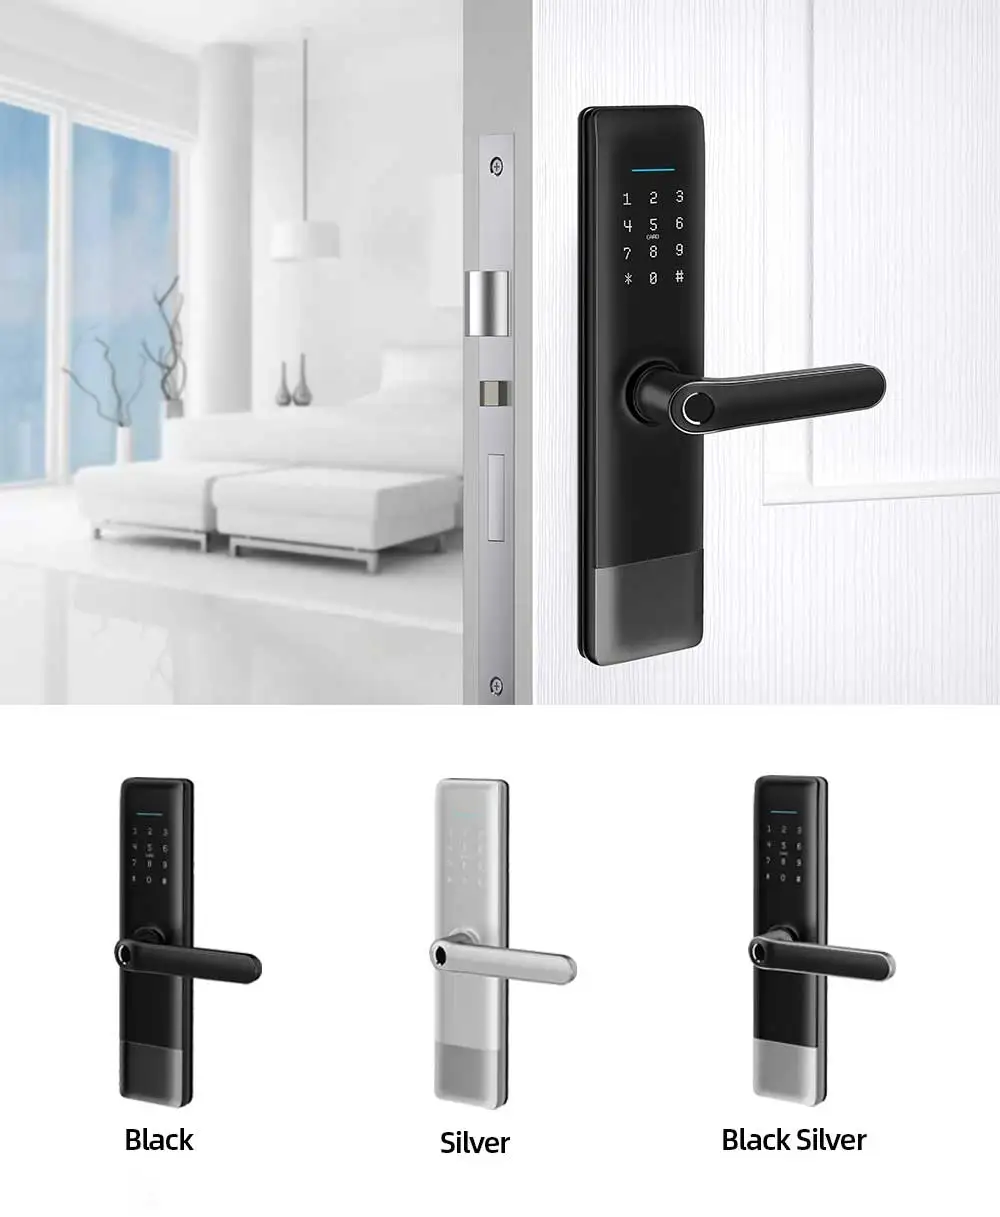 Slockrevo Wholesale Price anti-theft keypad digital key Card for Smart Door Locks